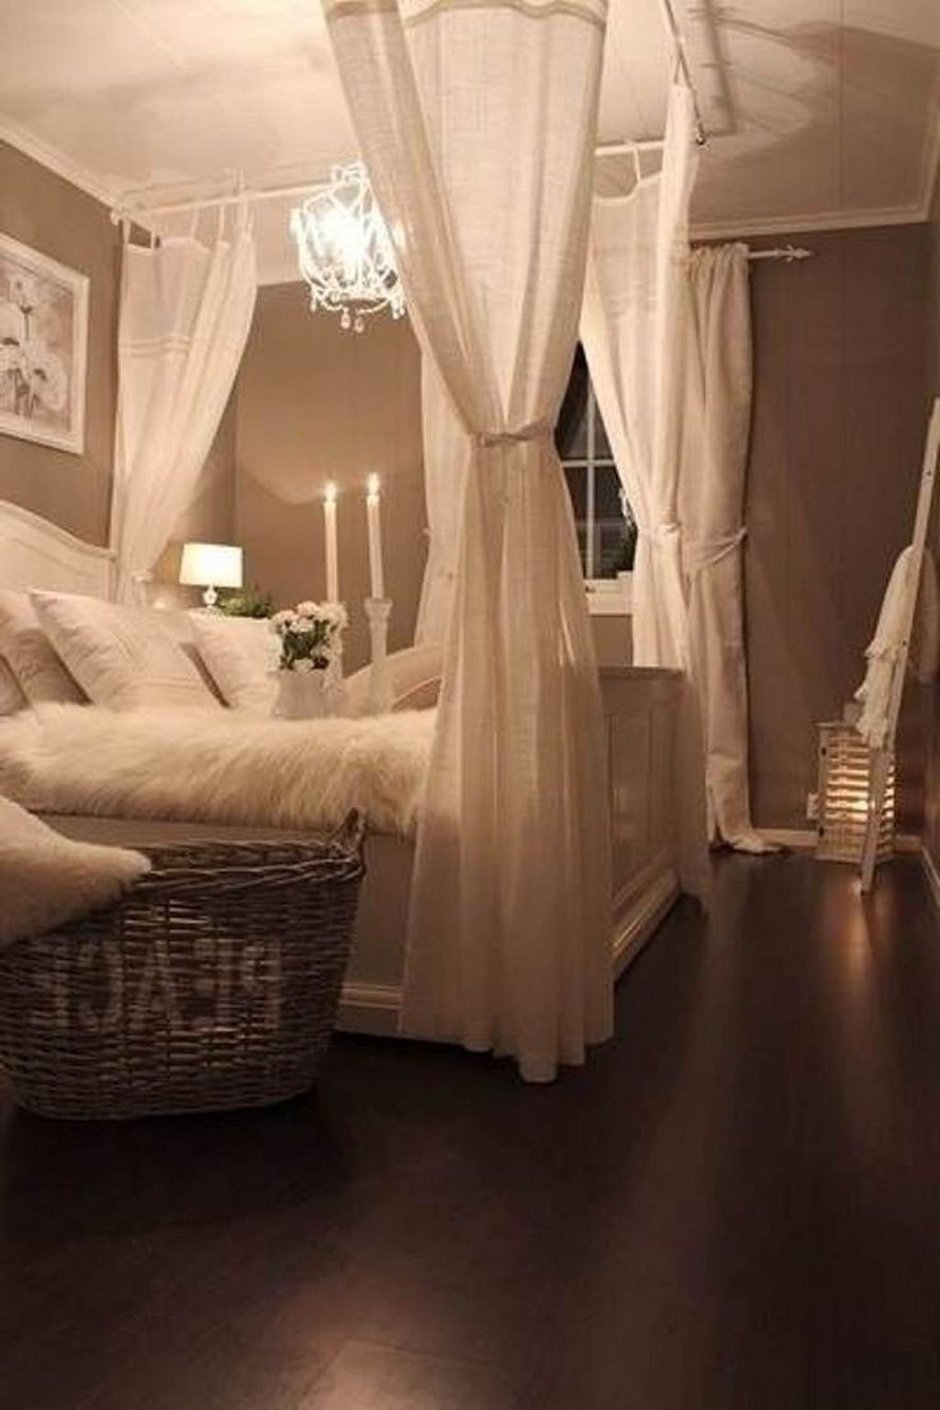 Уютная спальня с балдахином